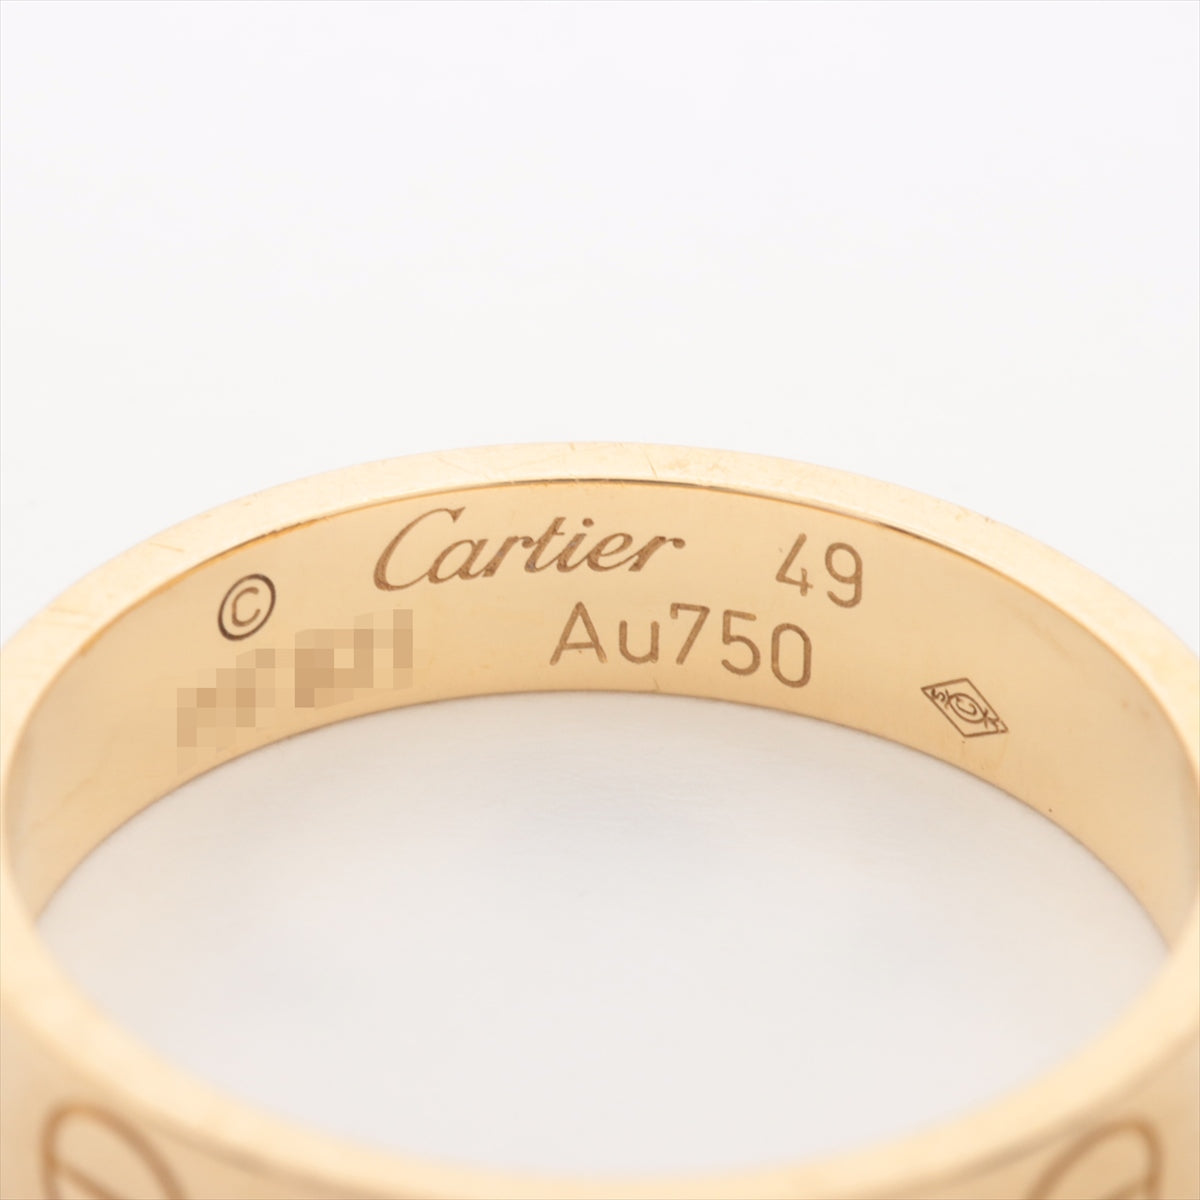 Cartier Mini Ring 750 (YG) 3.0g 49 E